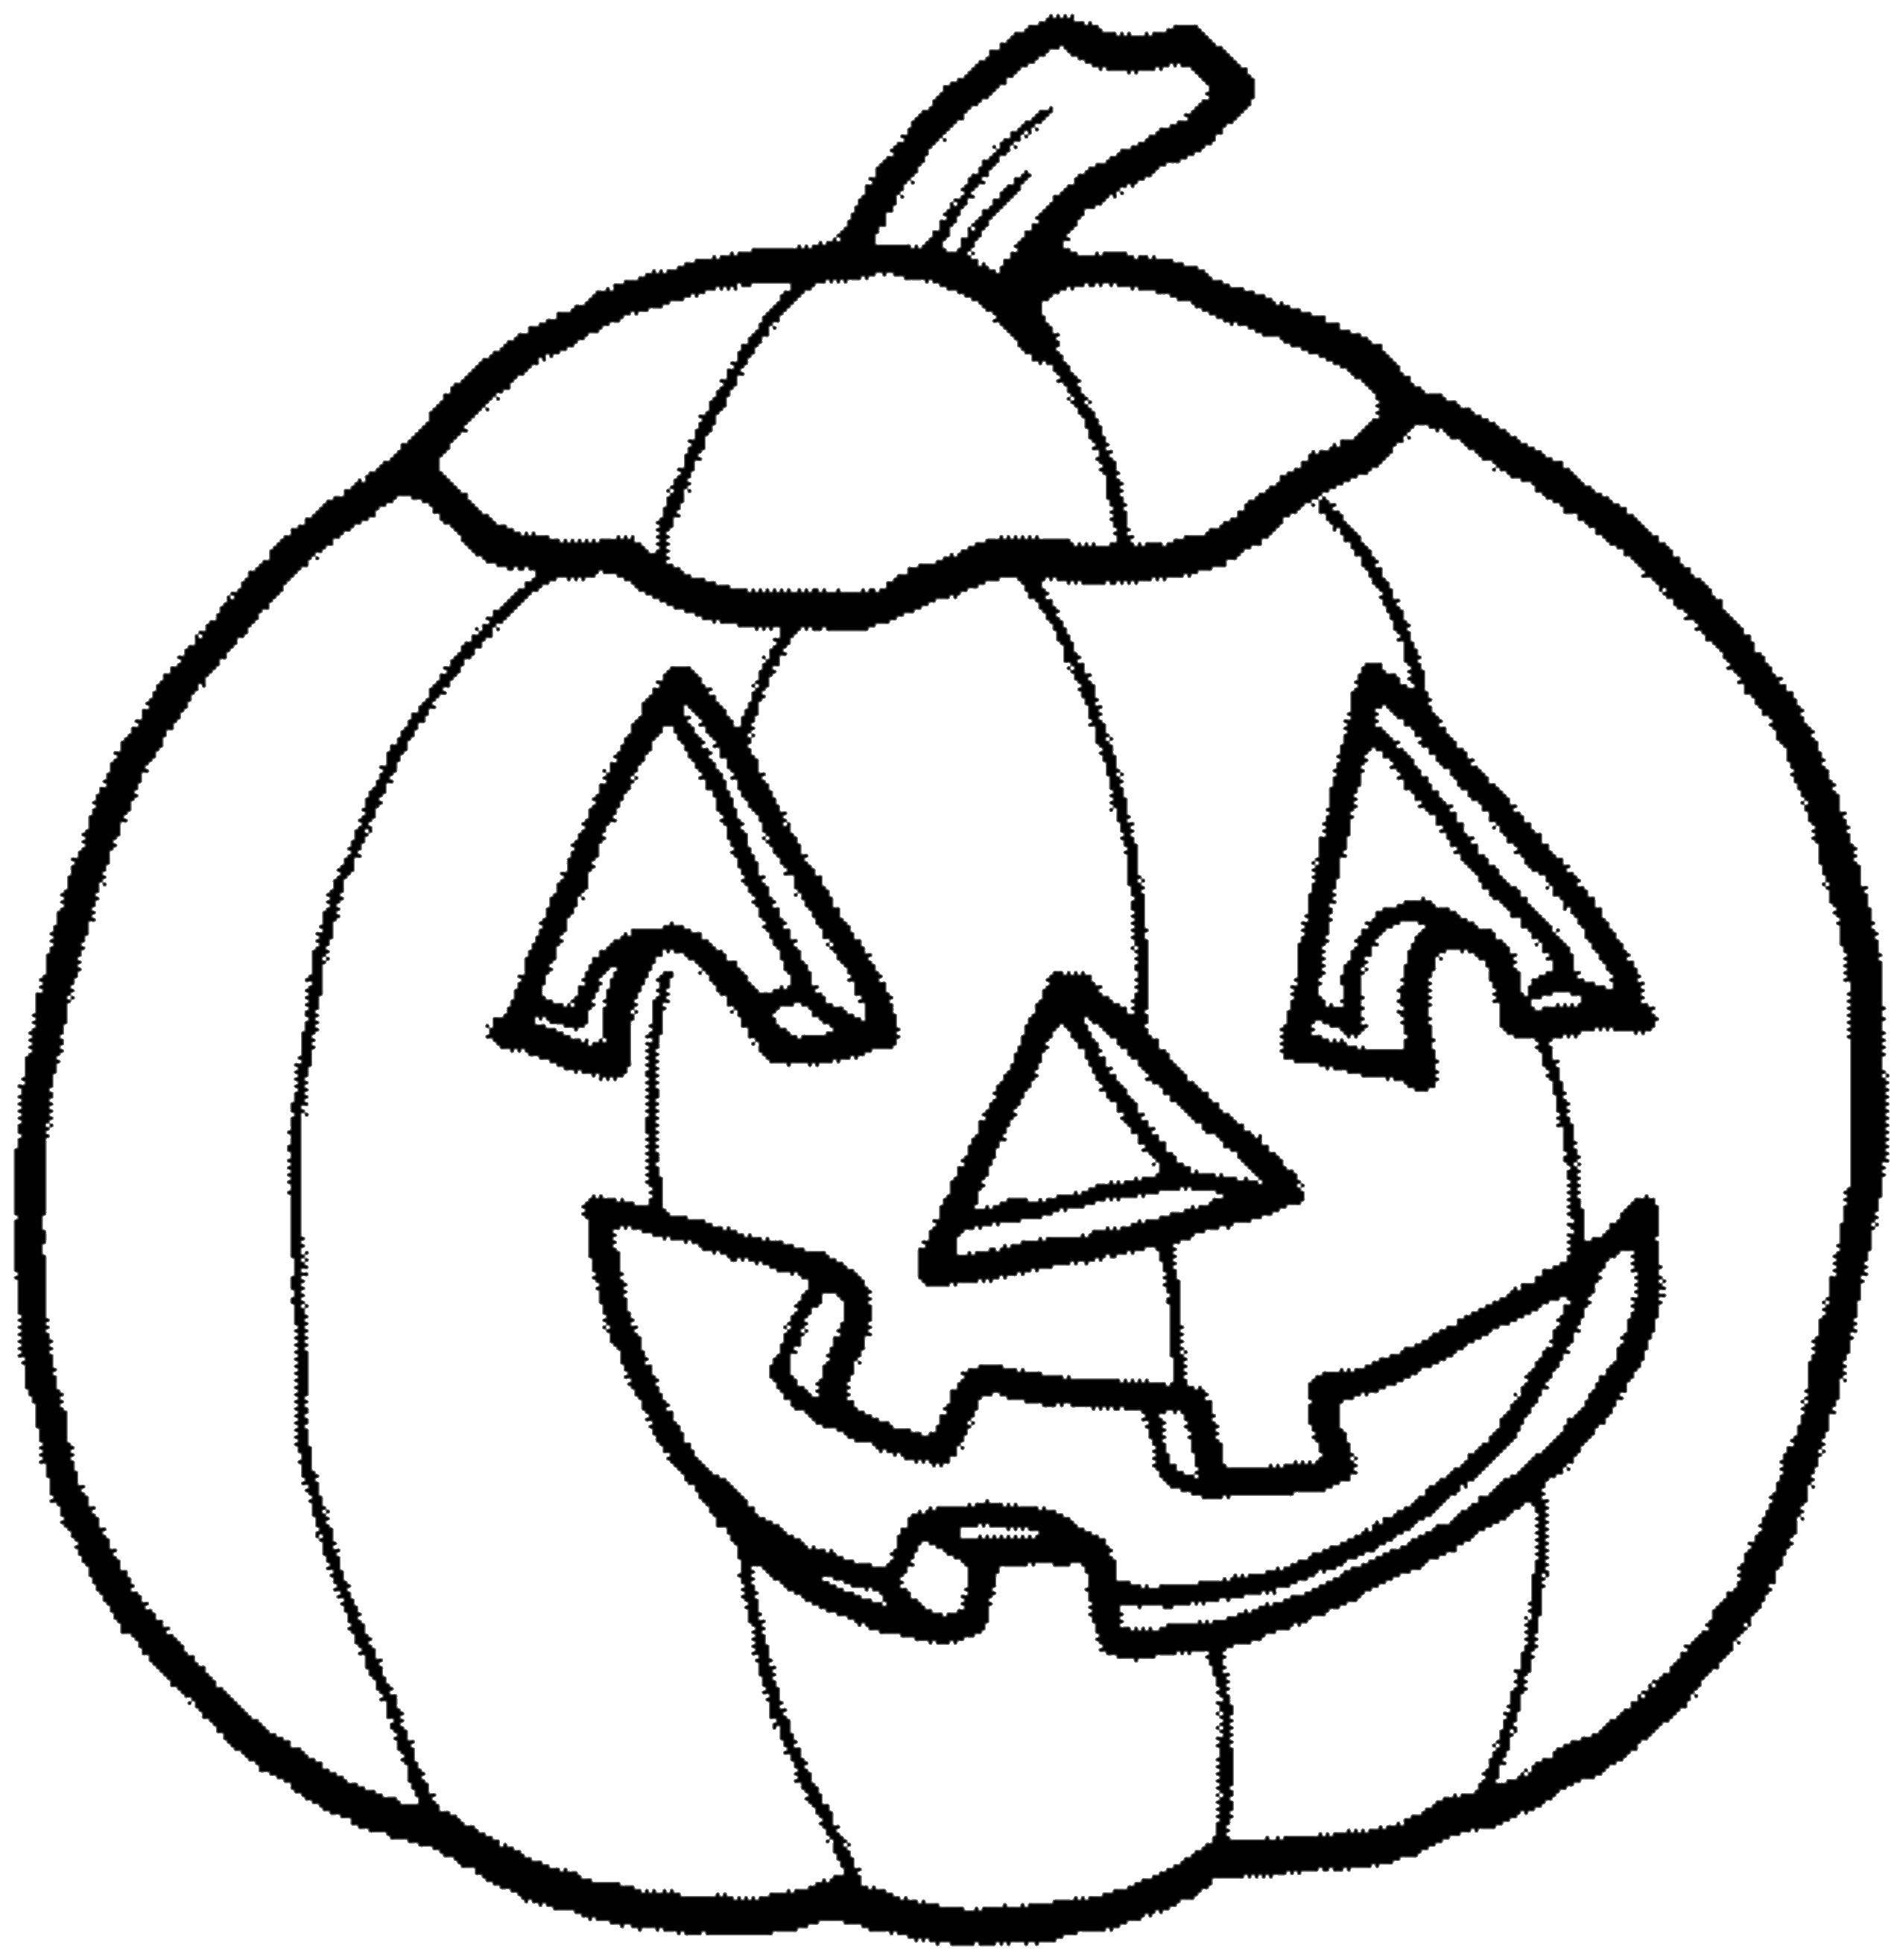 Coloring Pumpkin. Category vegetables. Tags:  vegetables, pumpkins, plants, Halloween.